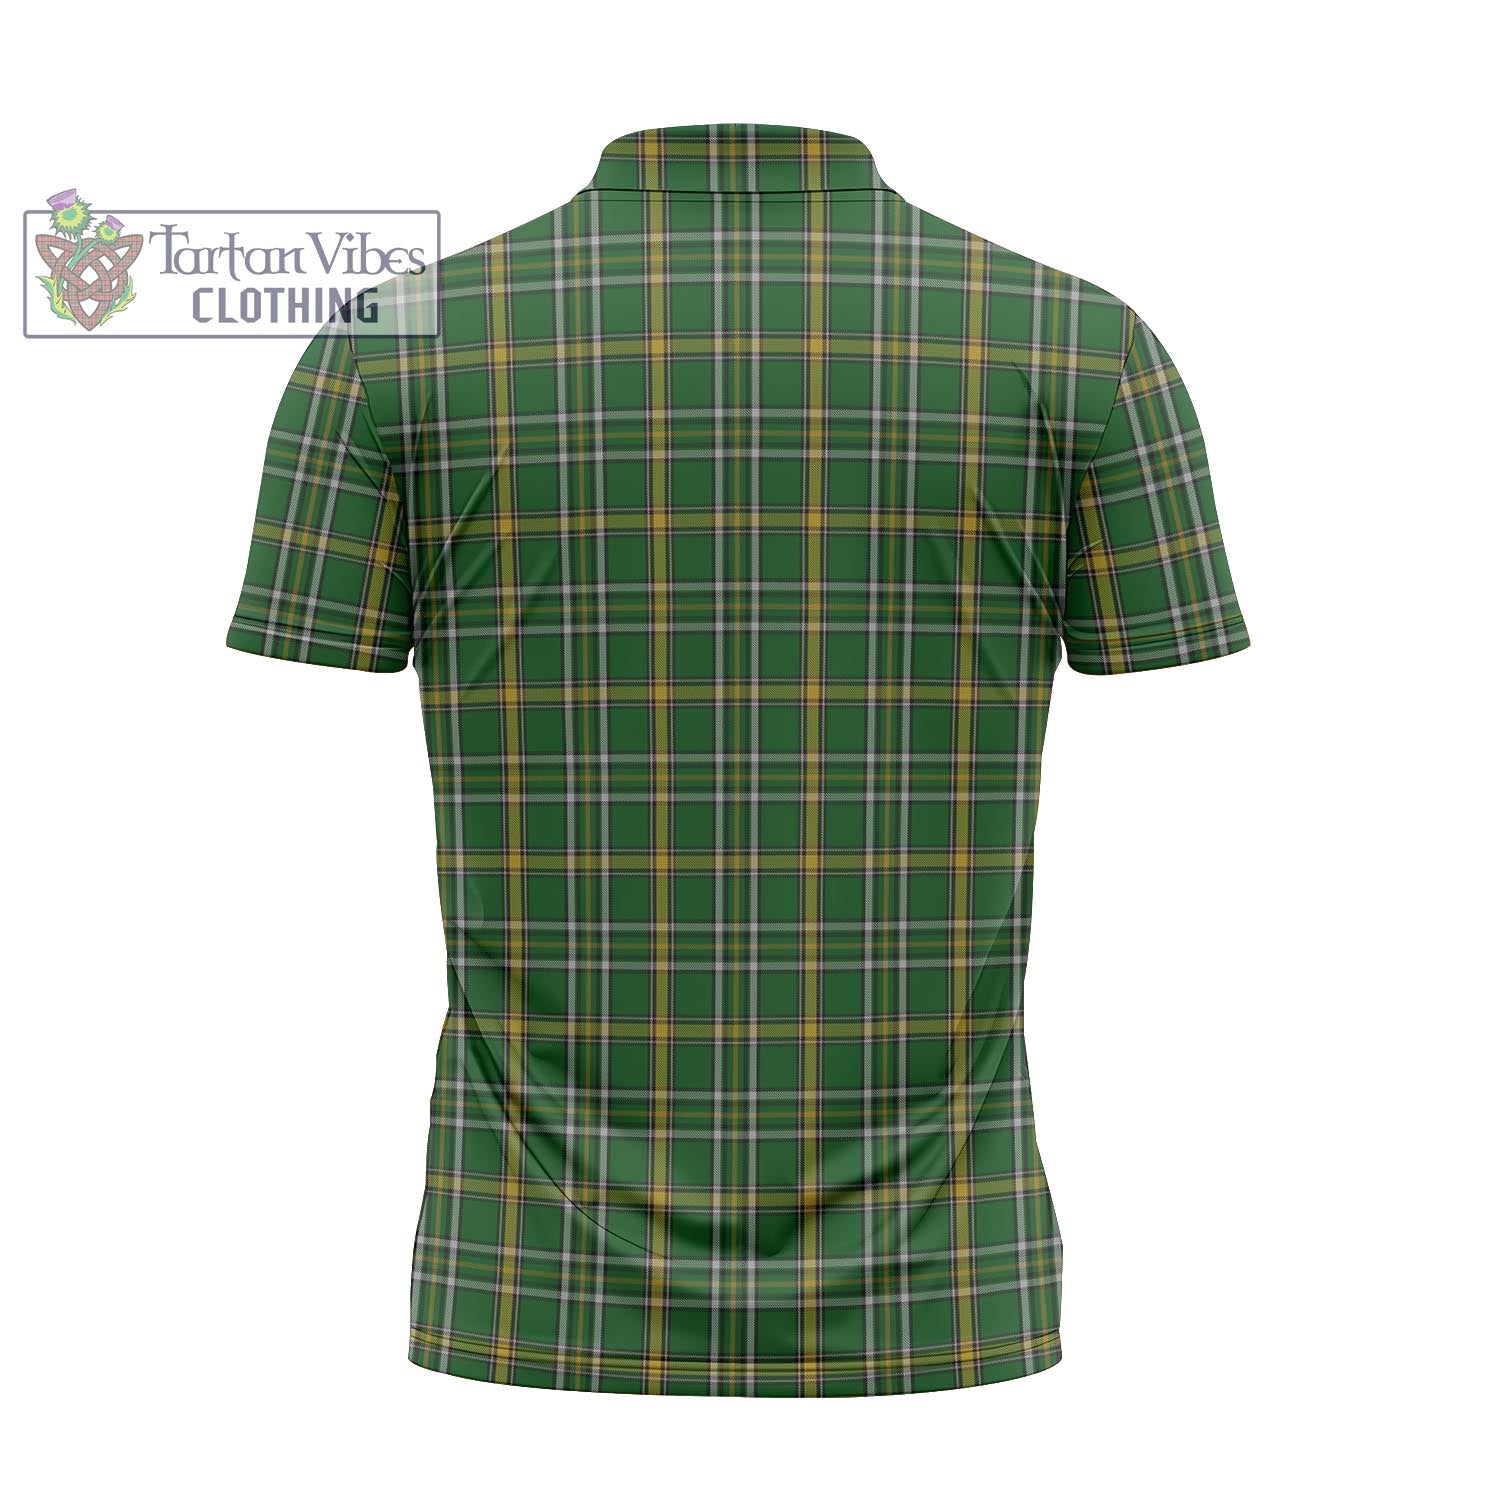 Tartan Vibes Clothing Offaly County Ireland Tartan Zipper Polo Shirt